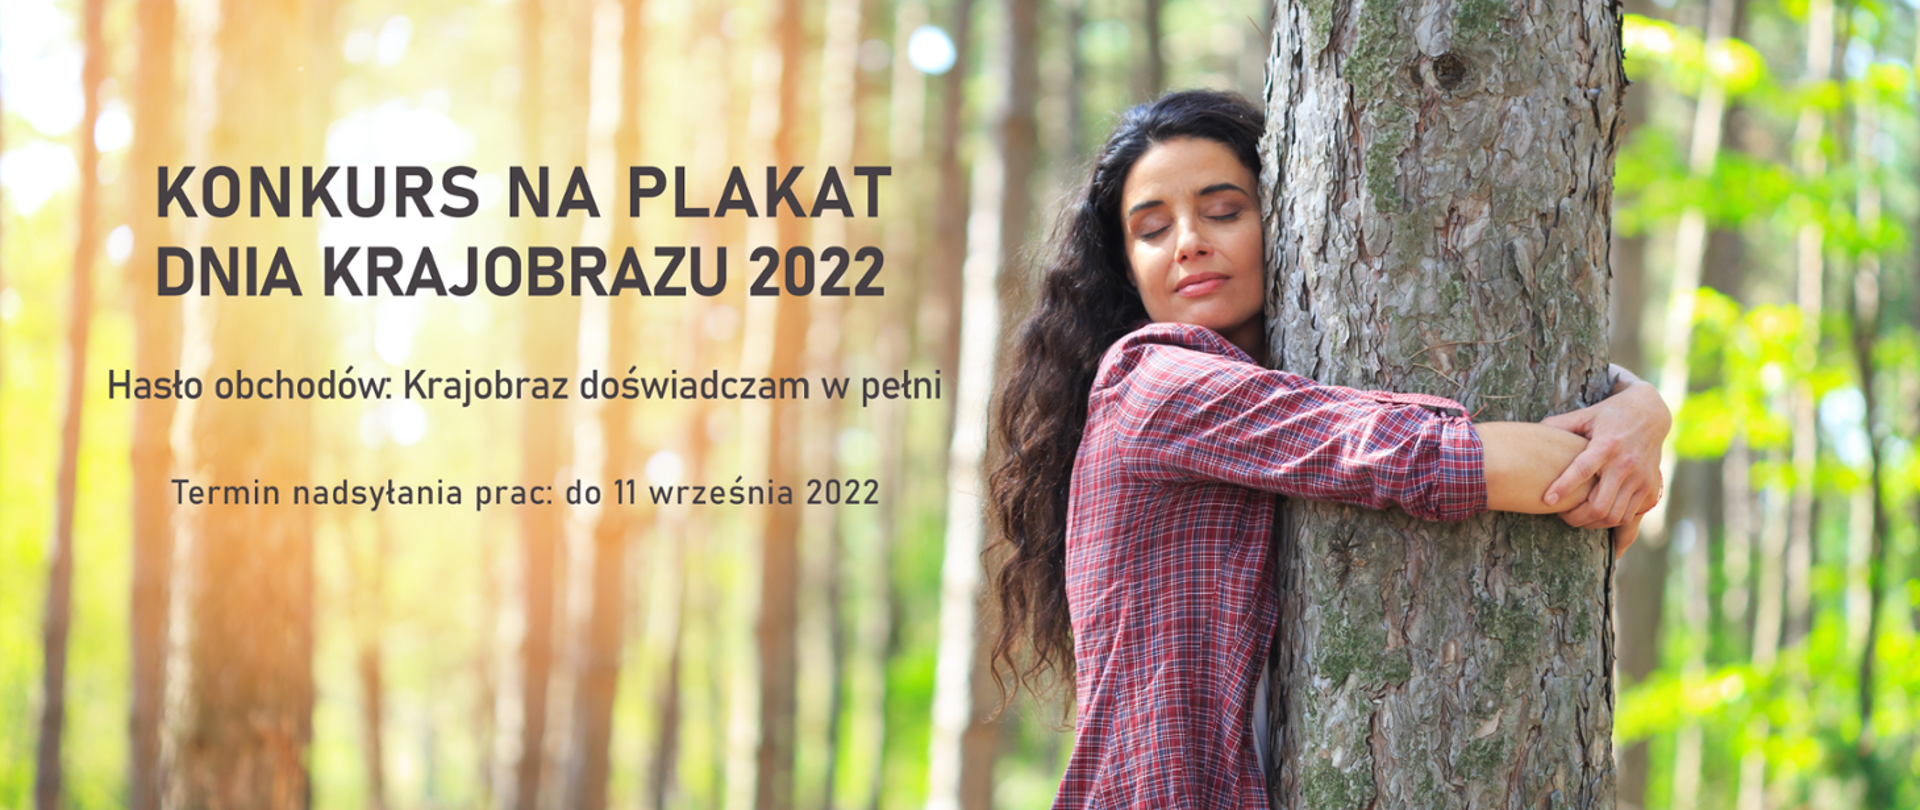 Konkurs na plakat Dnia Krajobrazu 2022